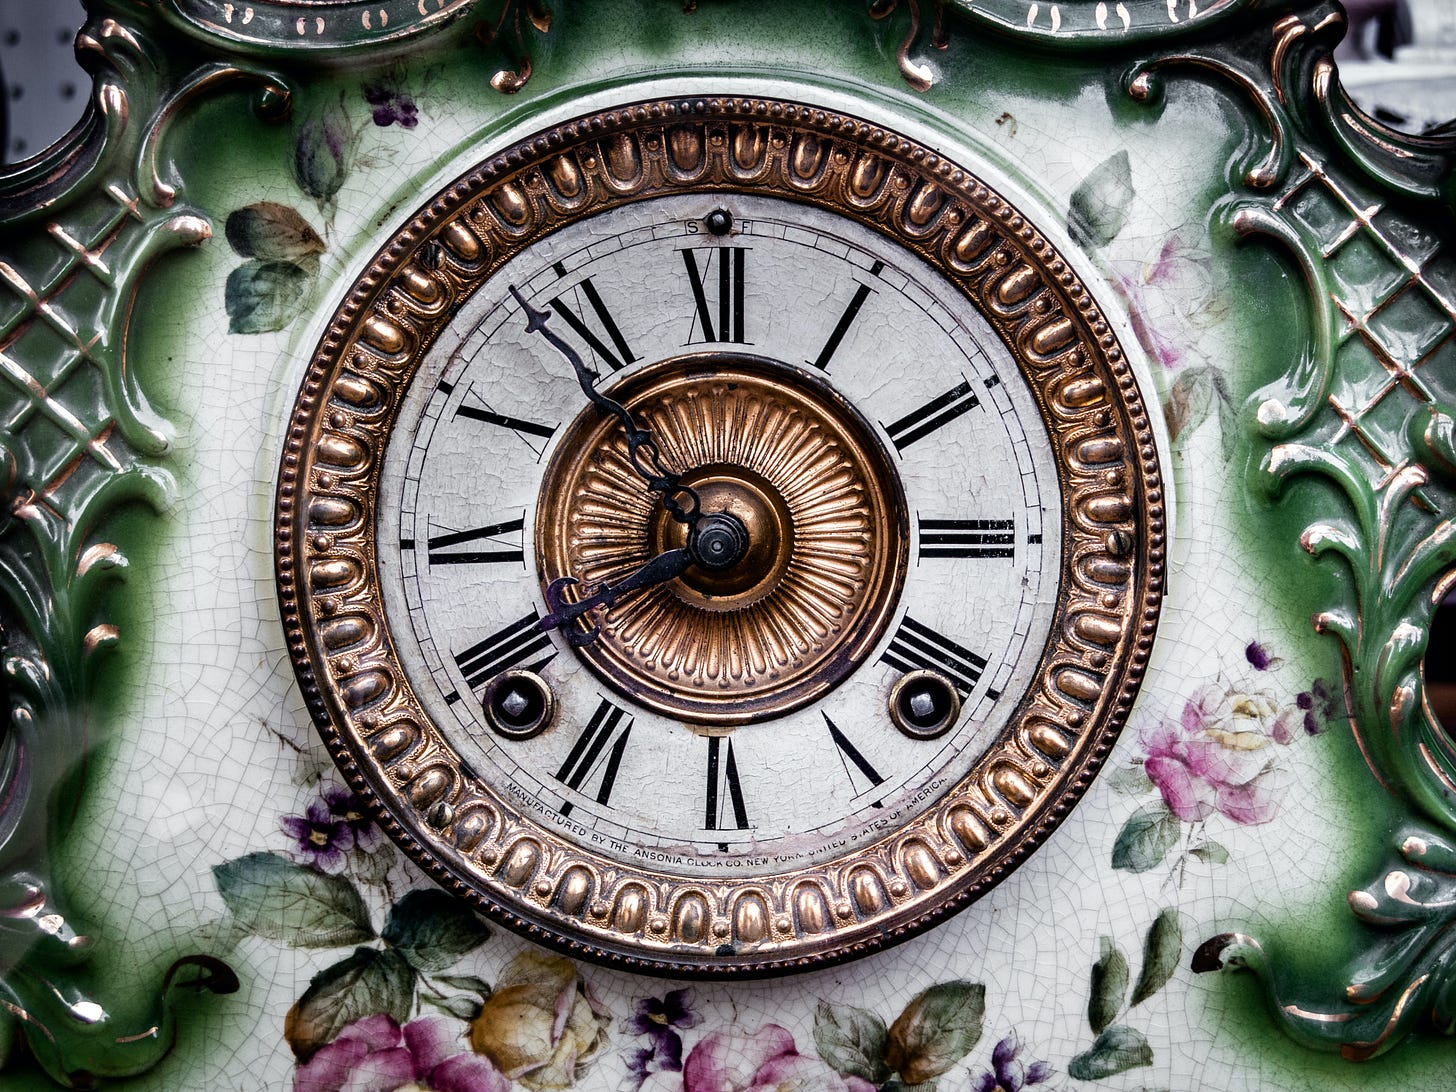 Photo of ornate clock by Elizabeth Kay available at https://unsplash.com/photos/GlDo_QI_tTE?utm_source=unsplash&utm_medium=referral&utm_content=creditShareLink